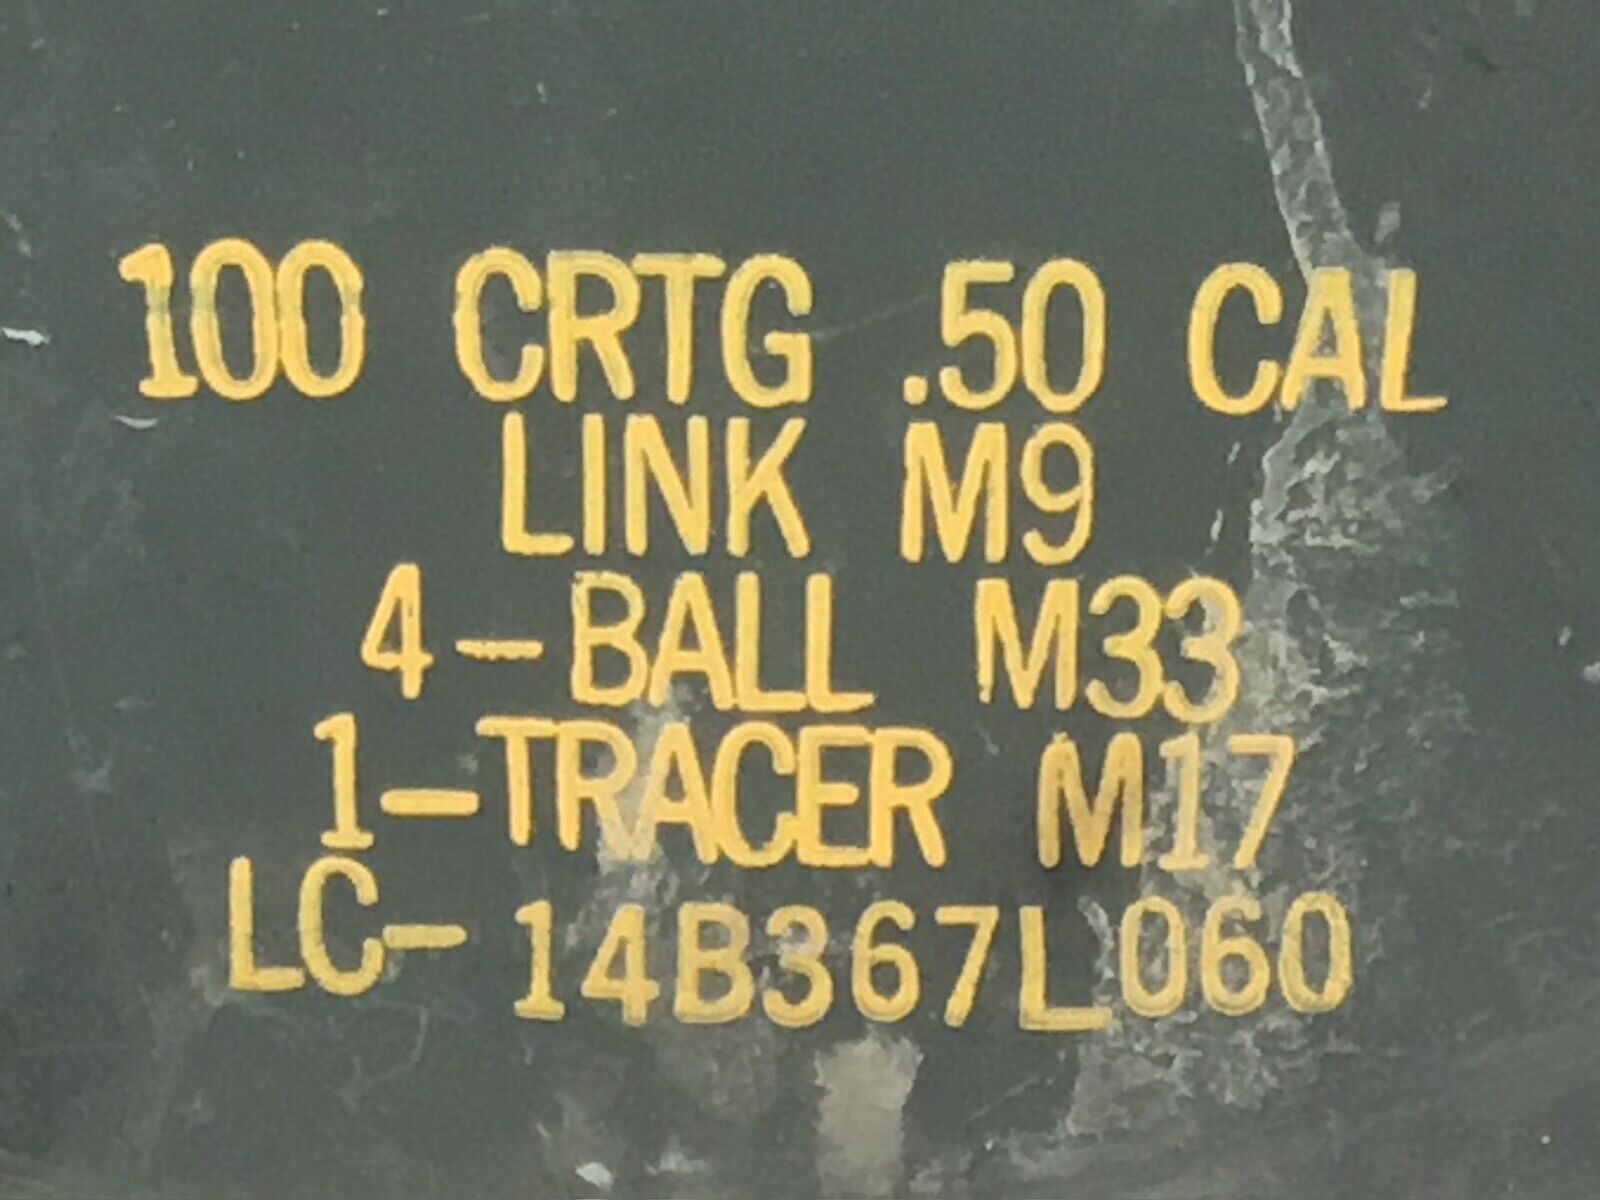 Original .50 CALIBER 5.56mm Military AMMO CAN M9 / M33 / M17 METAL AMMO CAN BOX